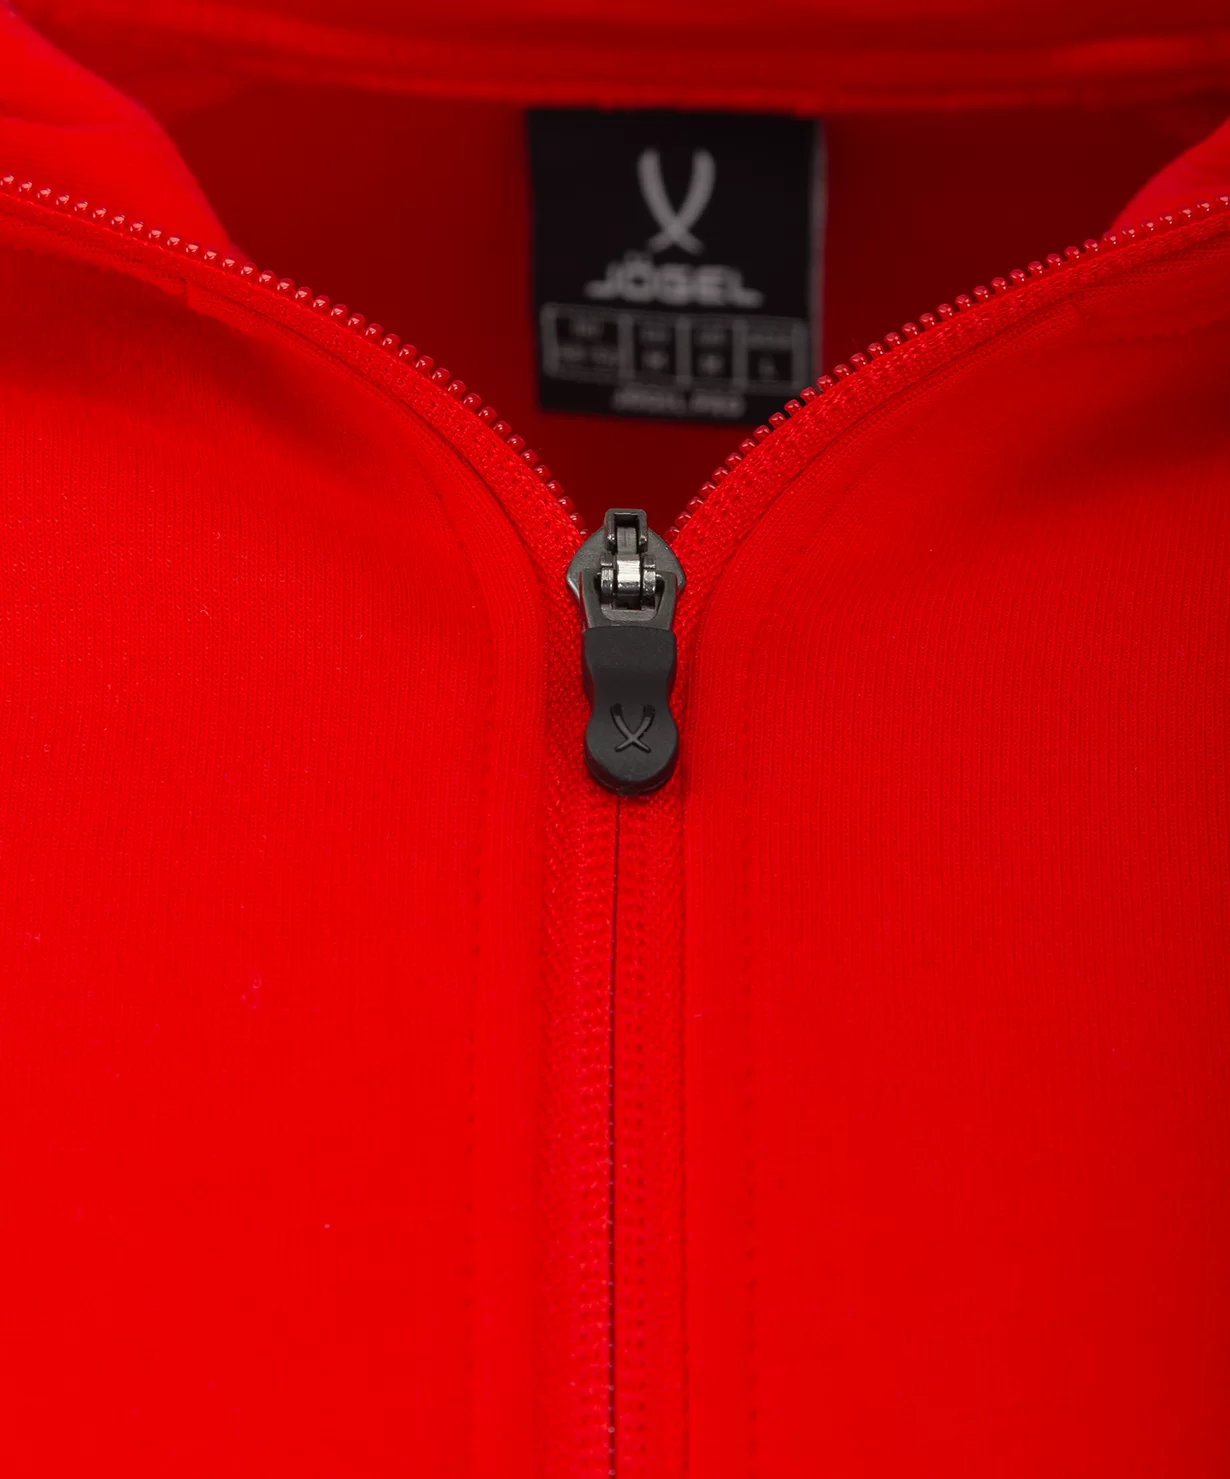 Фото Худи на молнии ESSENTIAL Athlete Hooded FZ Jacket, красный со склада магазина СпортСЕ